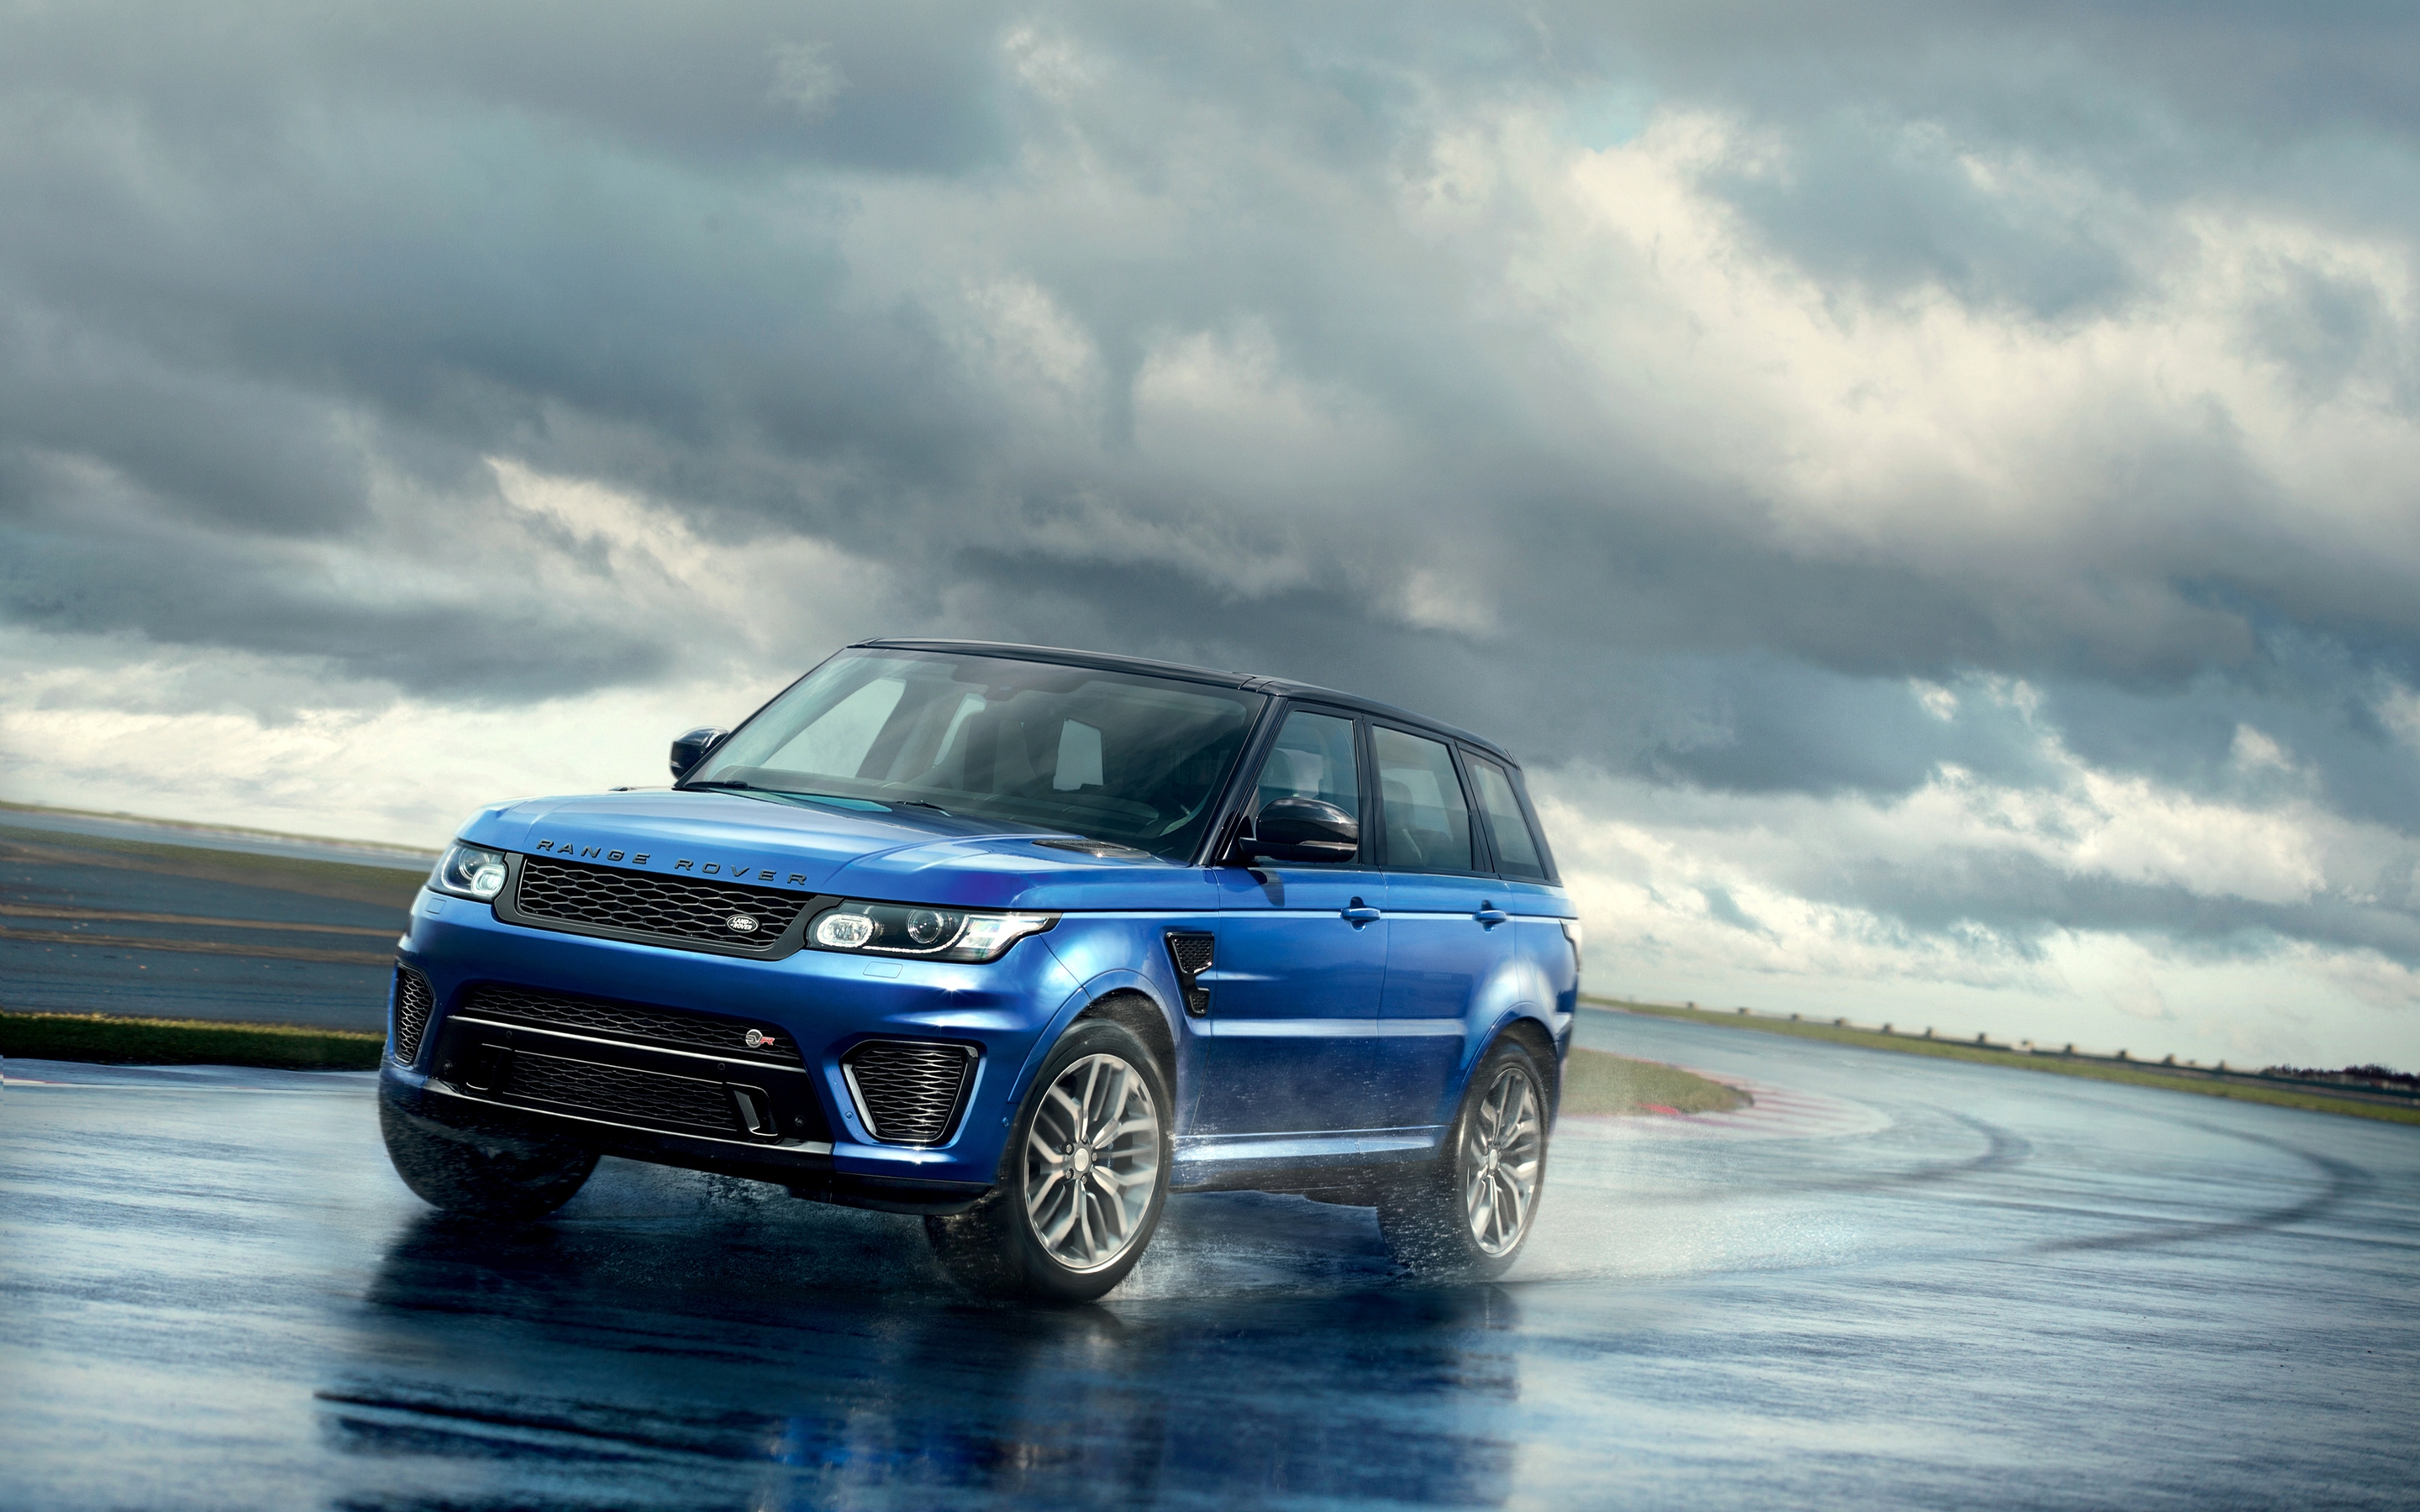 Gorgeous Blue Range Rover for 2880 x 1800 Retina Display resolution